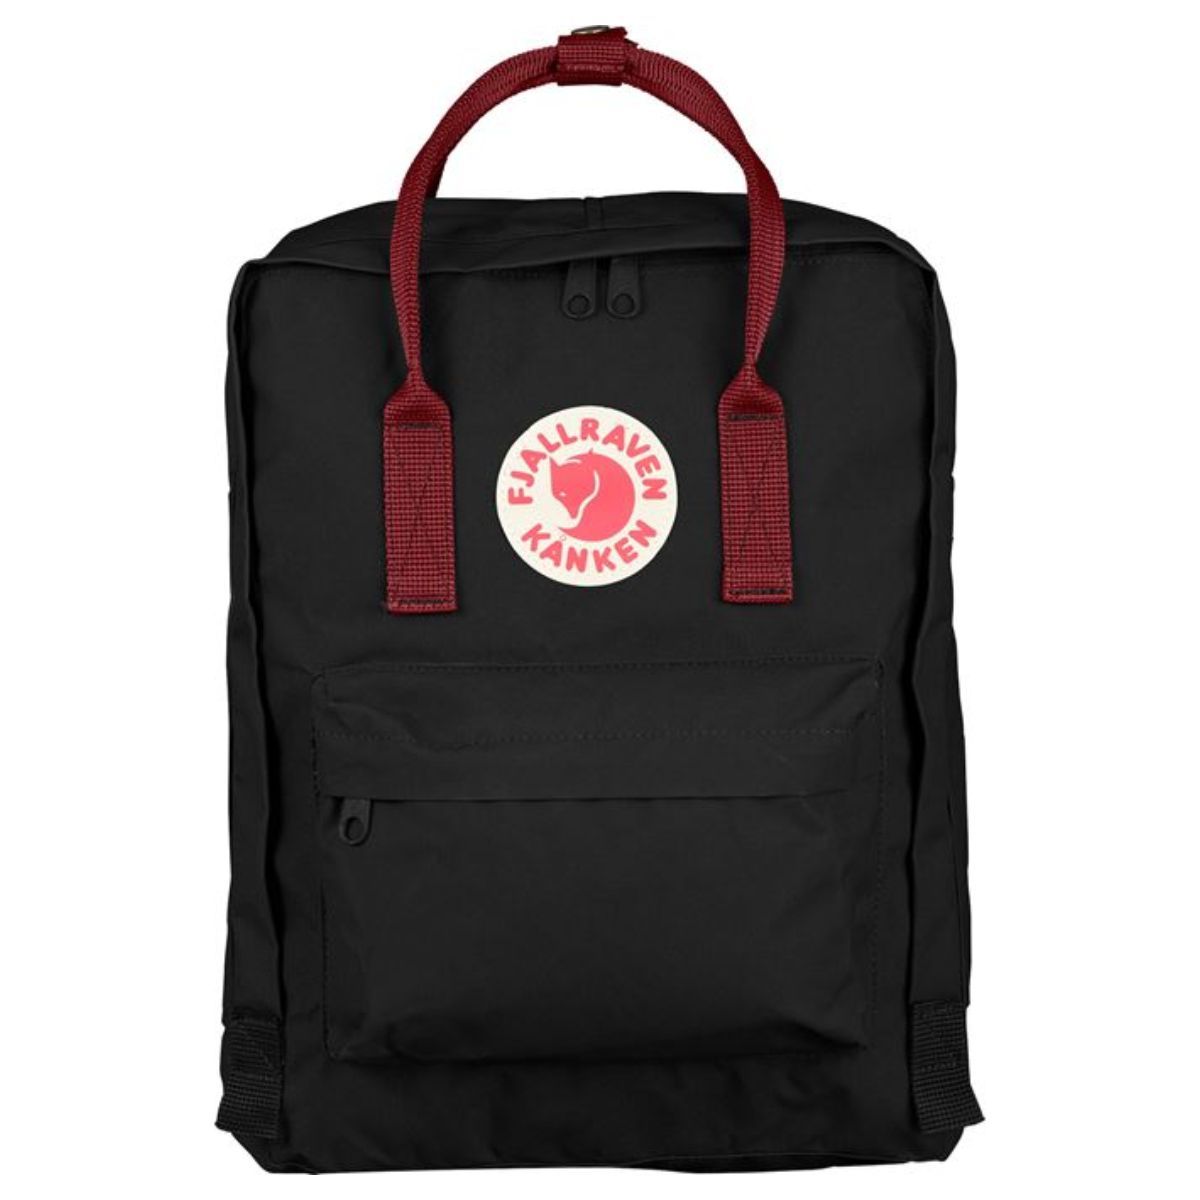 Міський рюкзак Fjallraven Kanken Black/Ox Red 16 л 23510.550-326